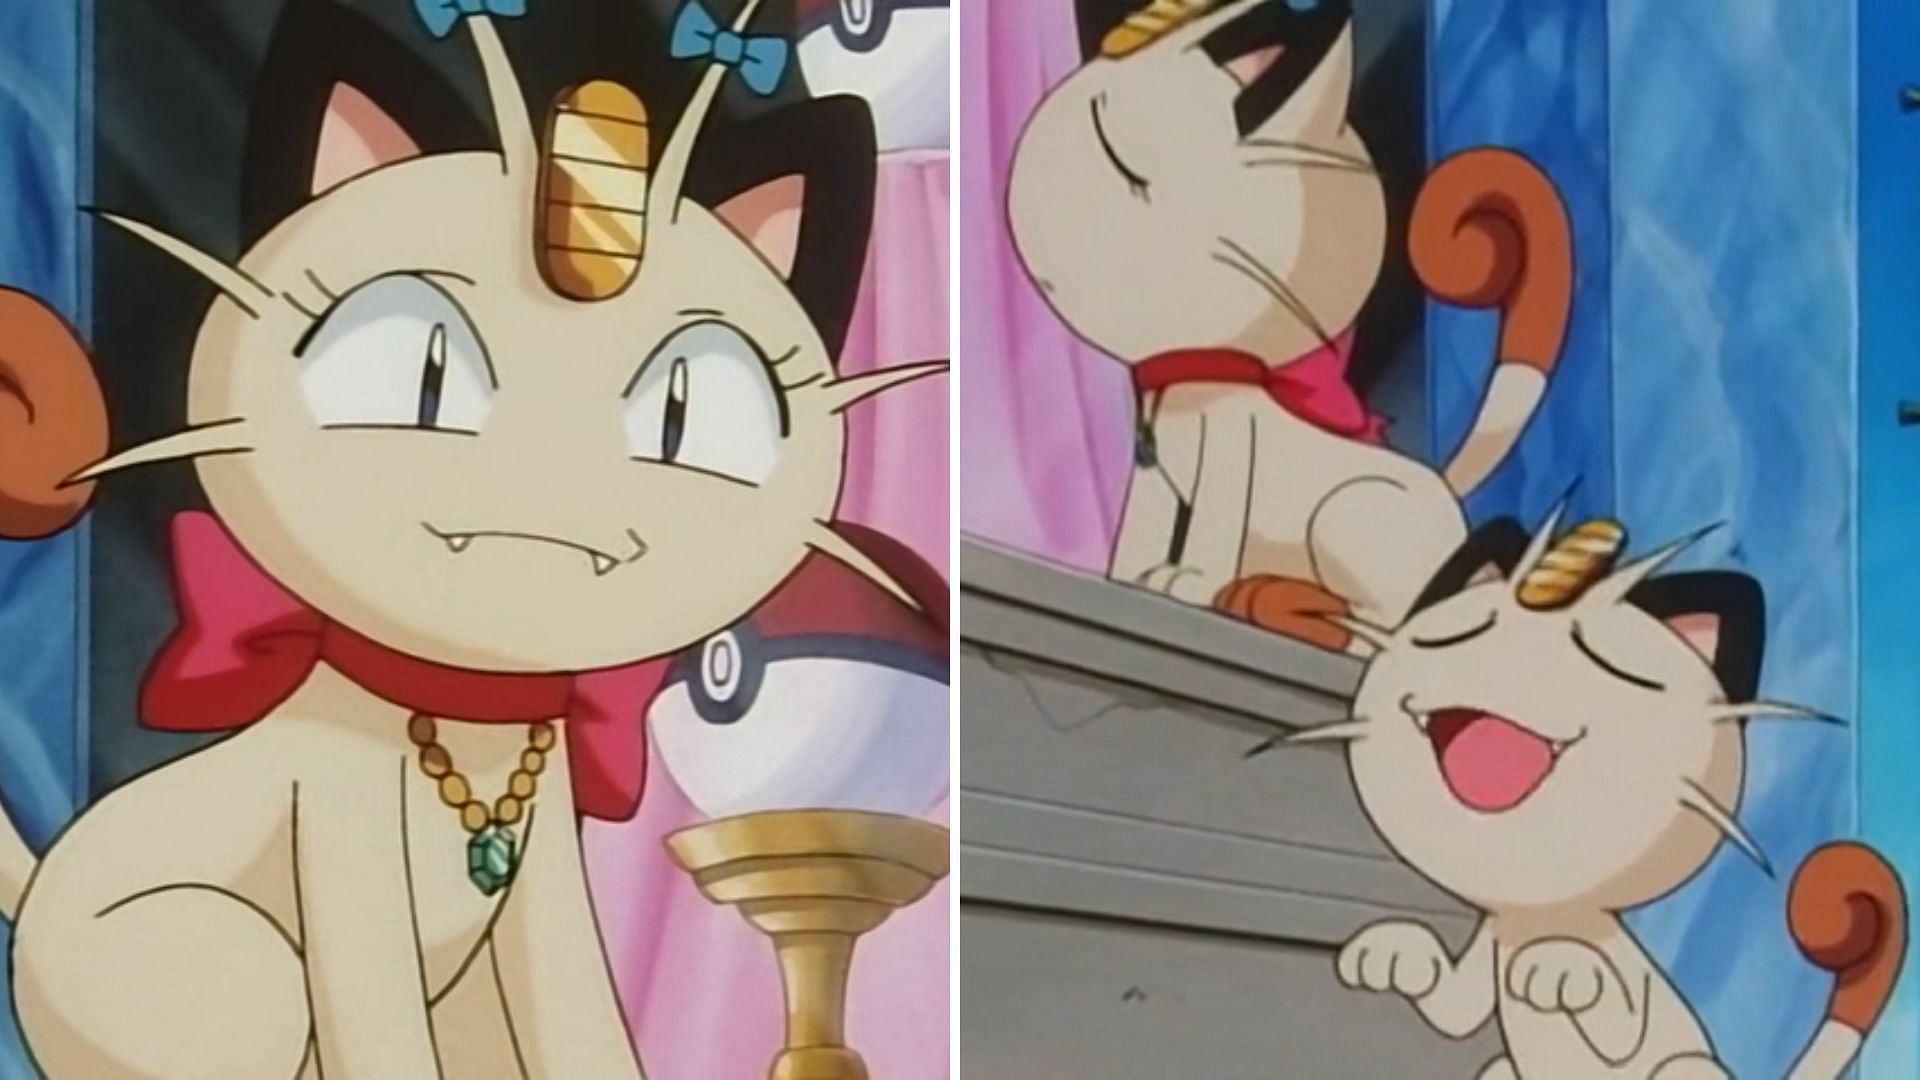 Meowzie e Meowth come visti nell'anime (Immagine via TPC)